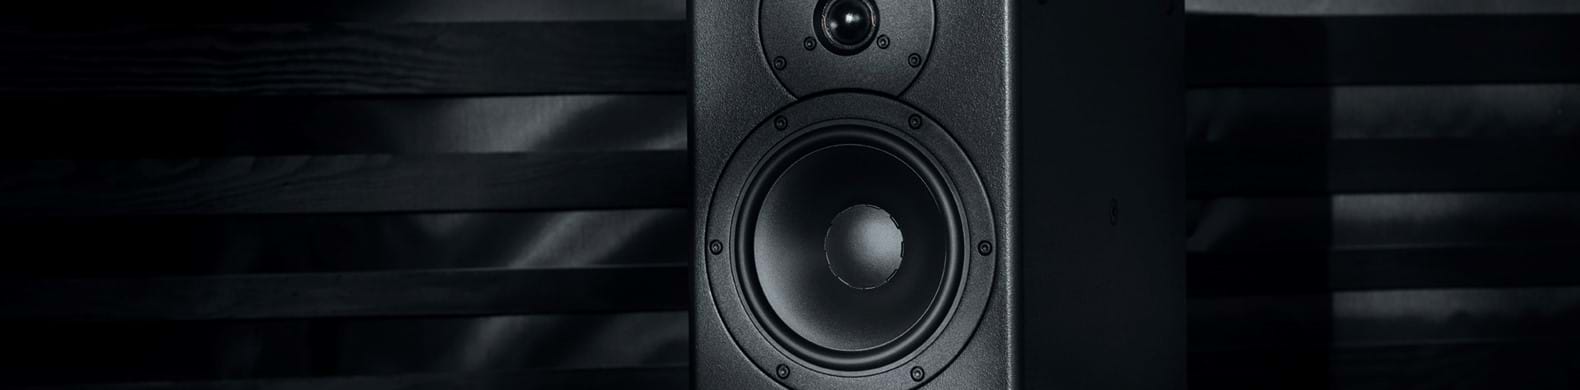 MusicTech Magazine reviews Core 7